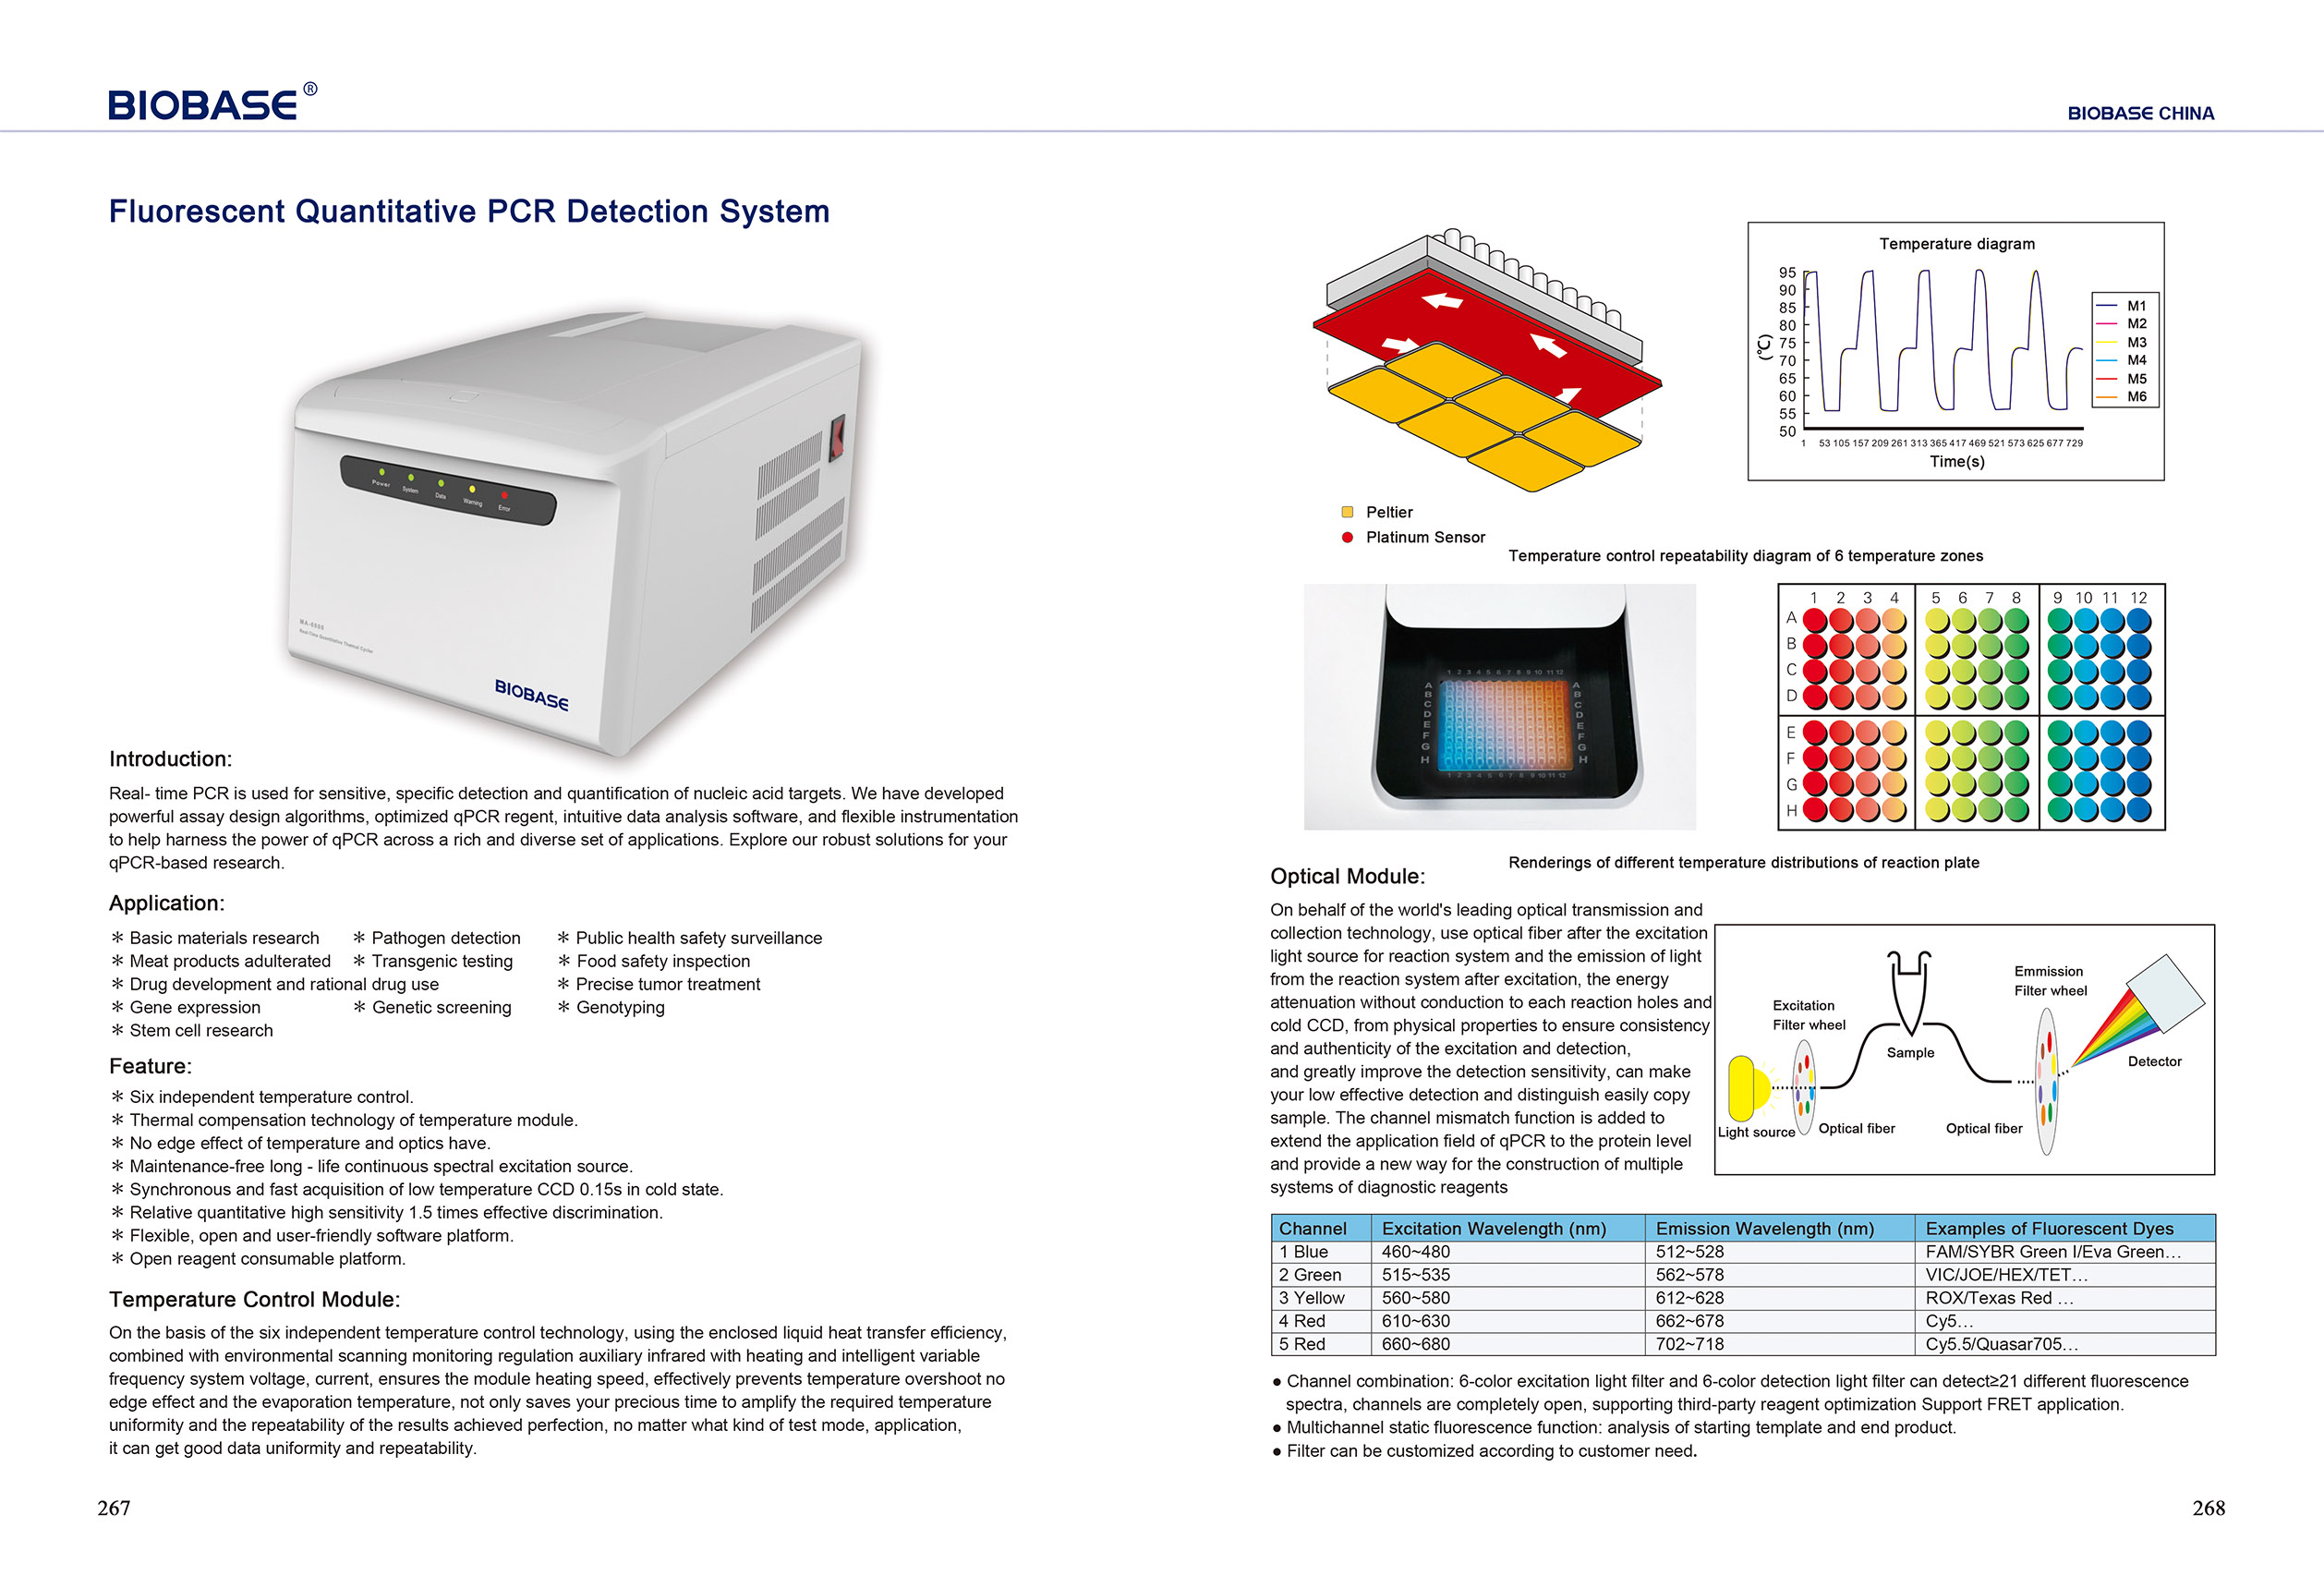 267-268 Fluorescent Quantitative PCR Detection System MA-6000